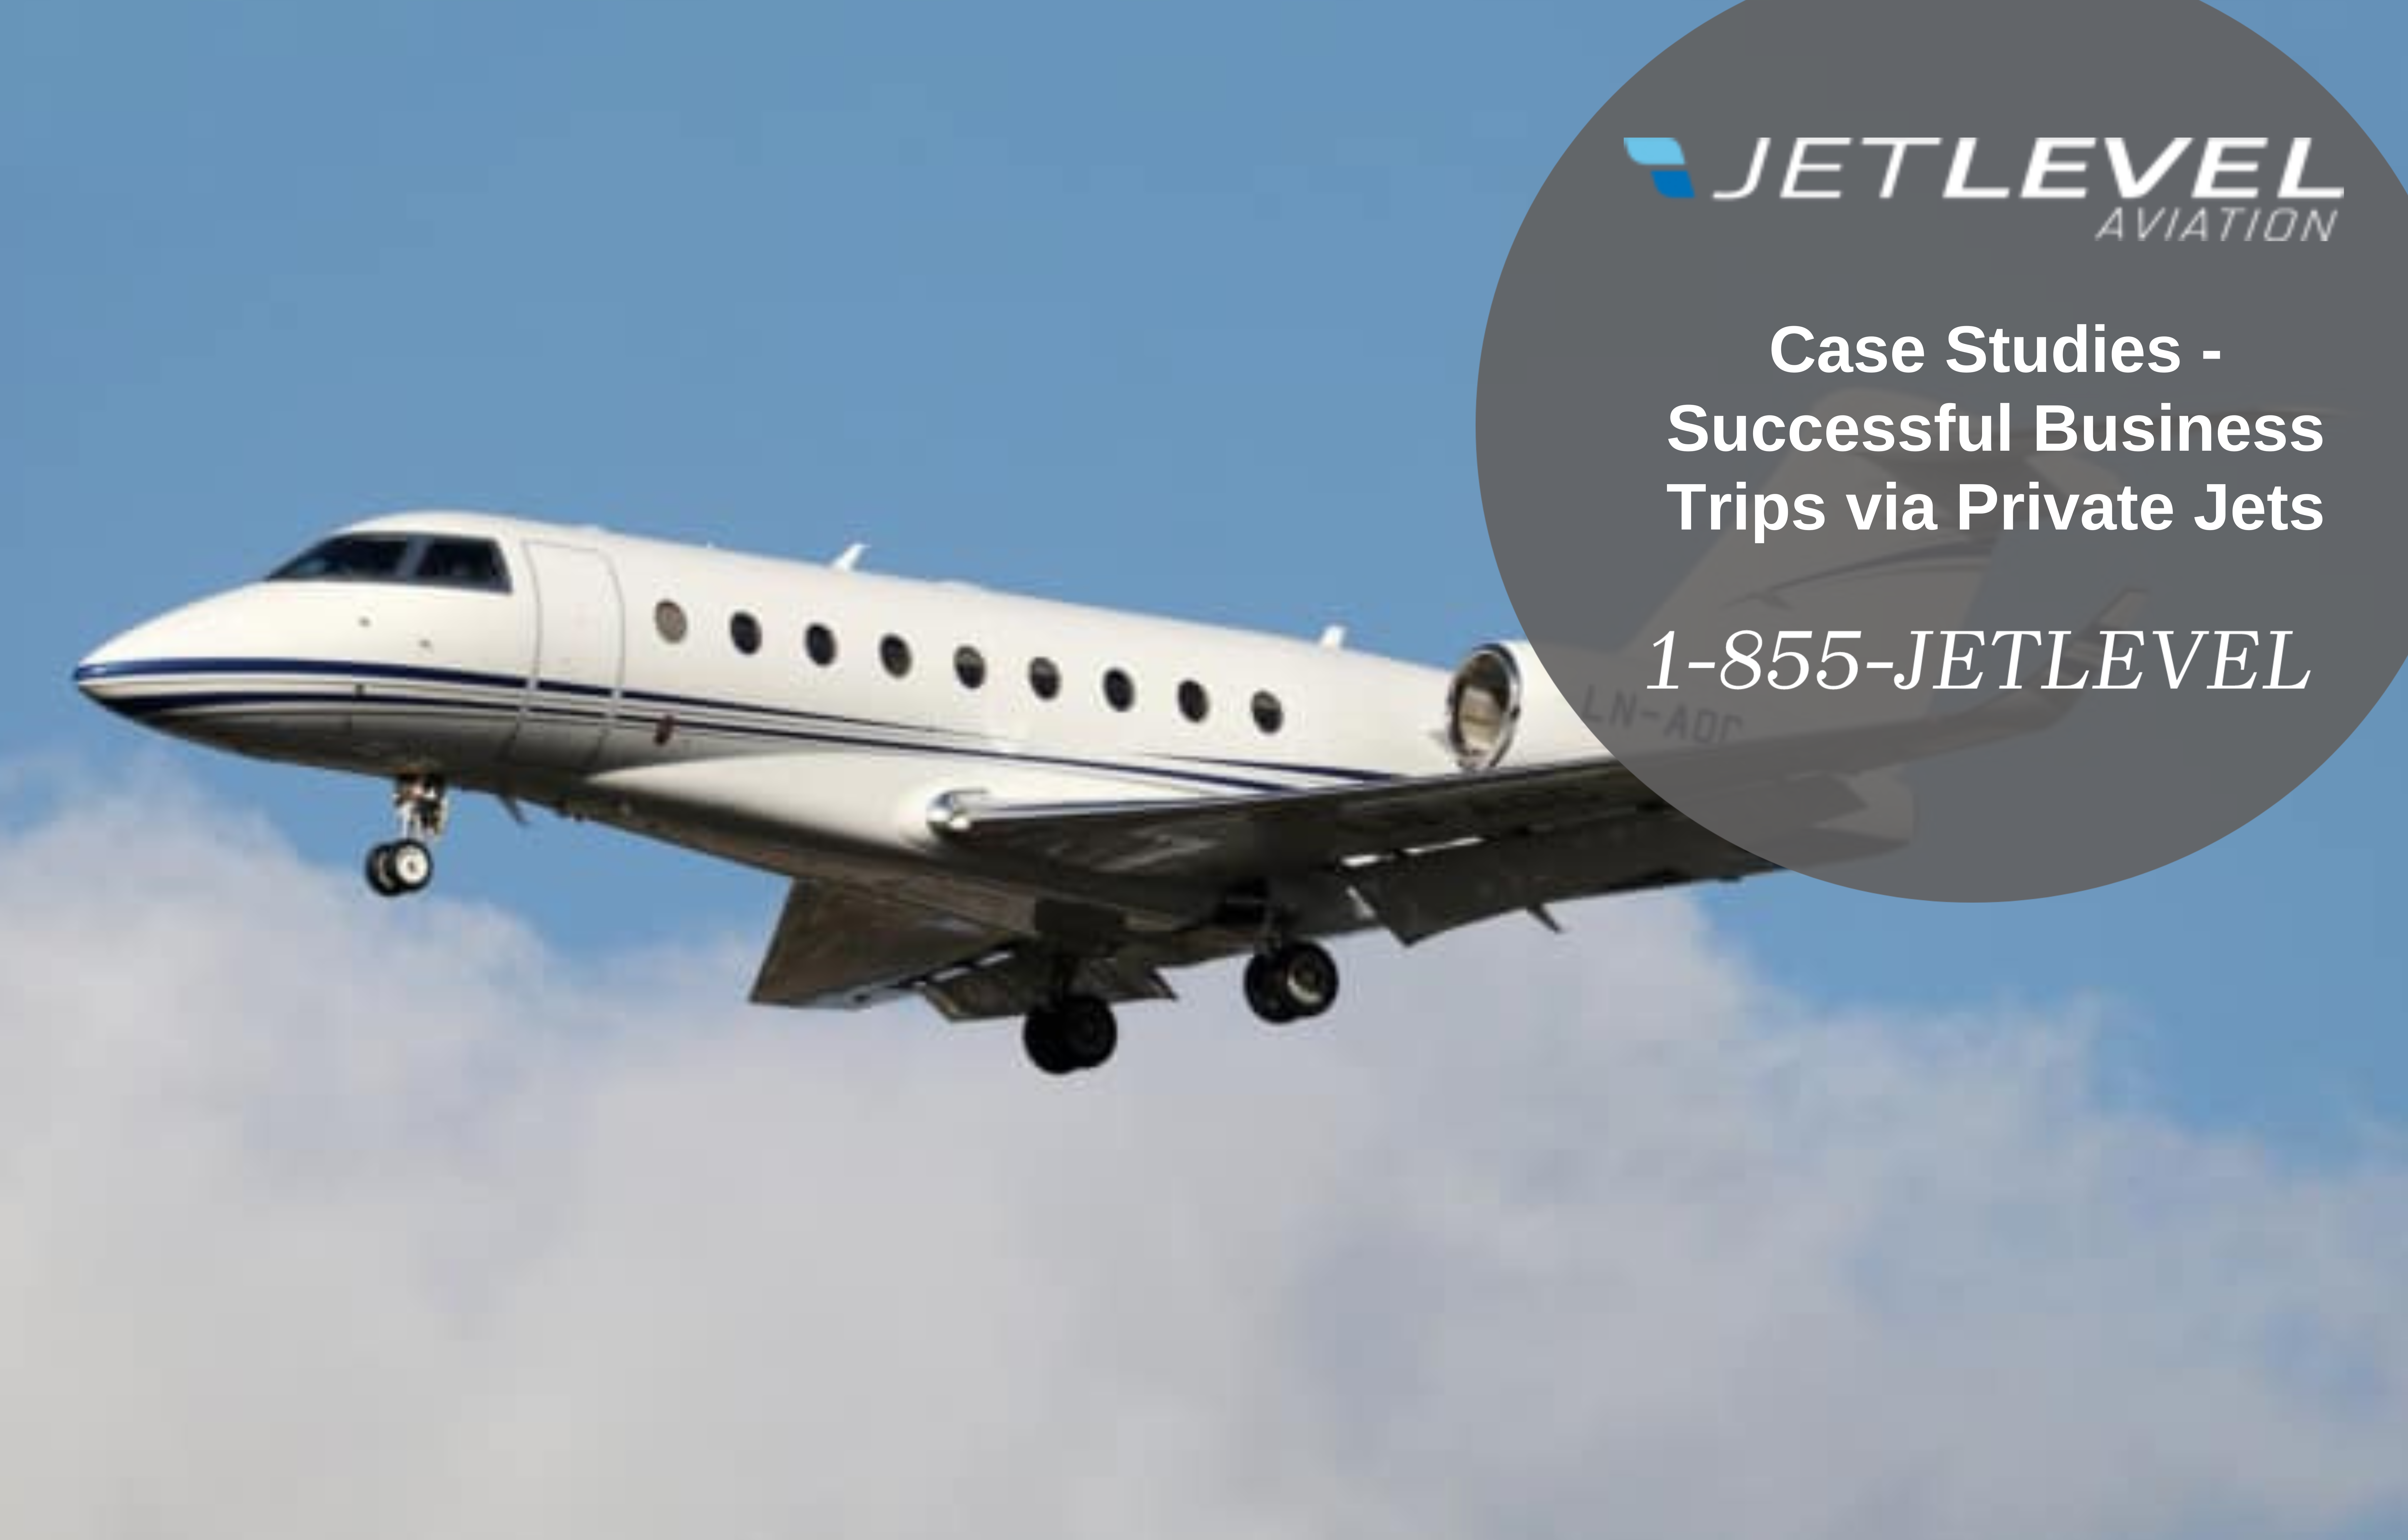 Case Studies - Successful Business Trips via Private Jets